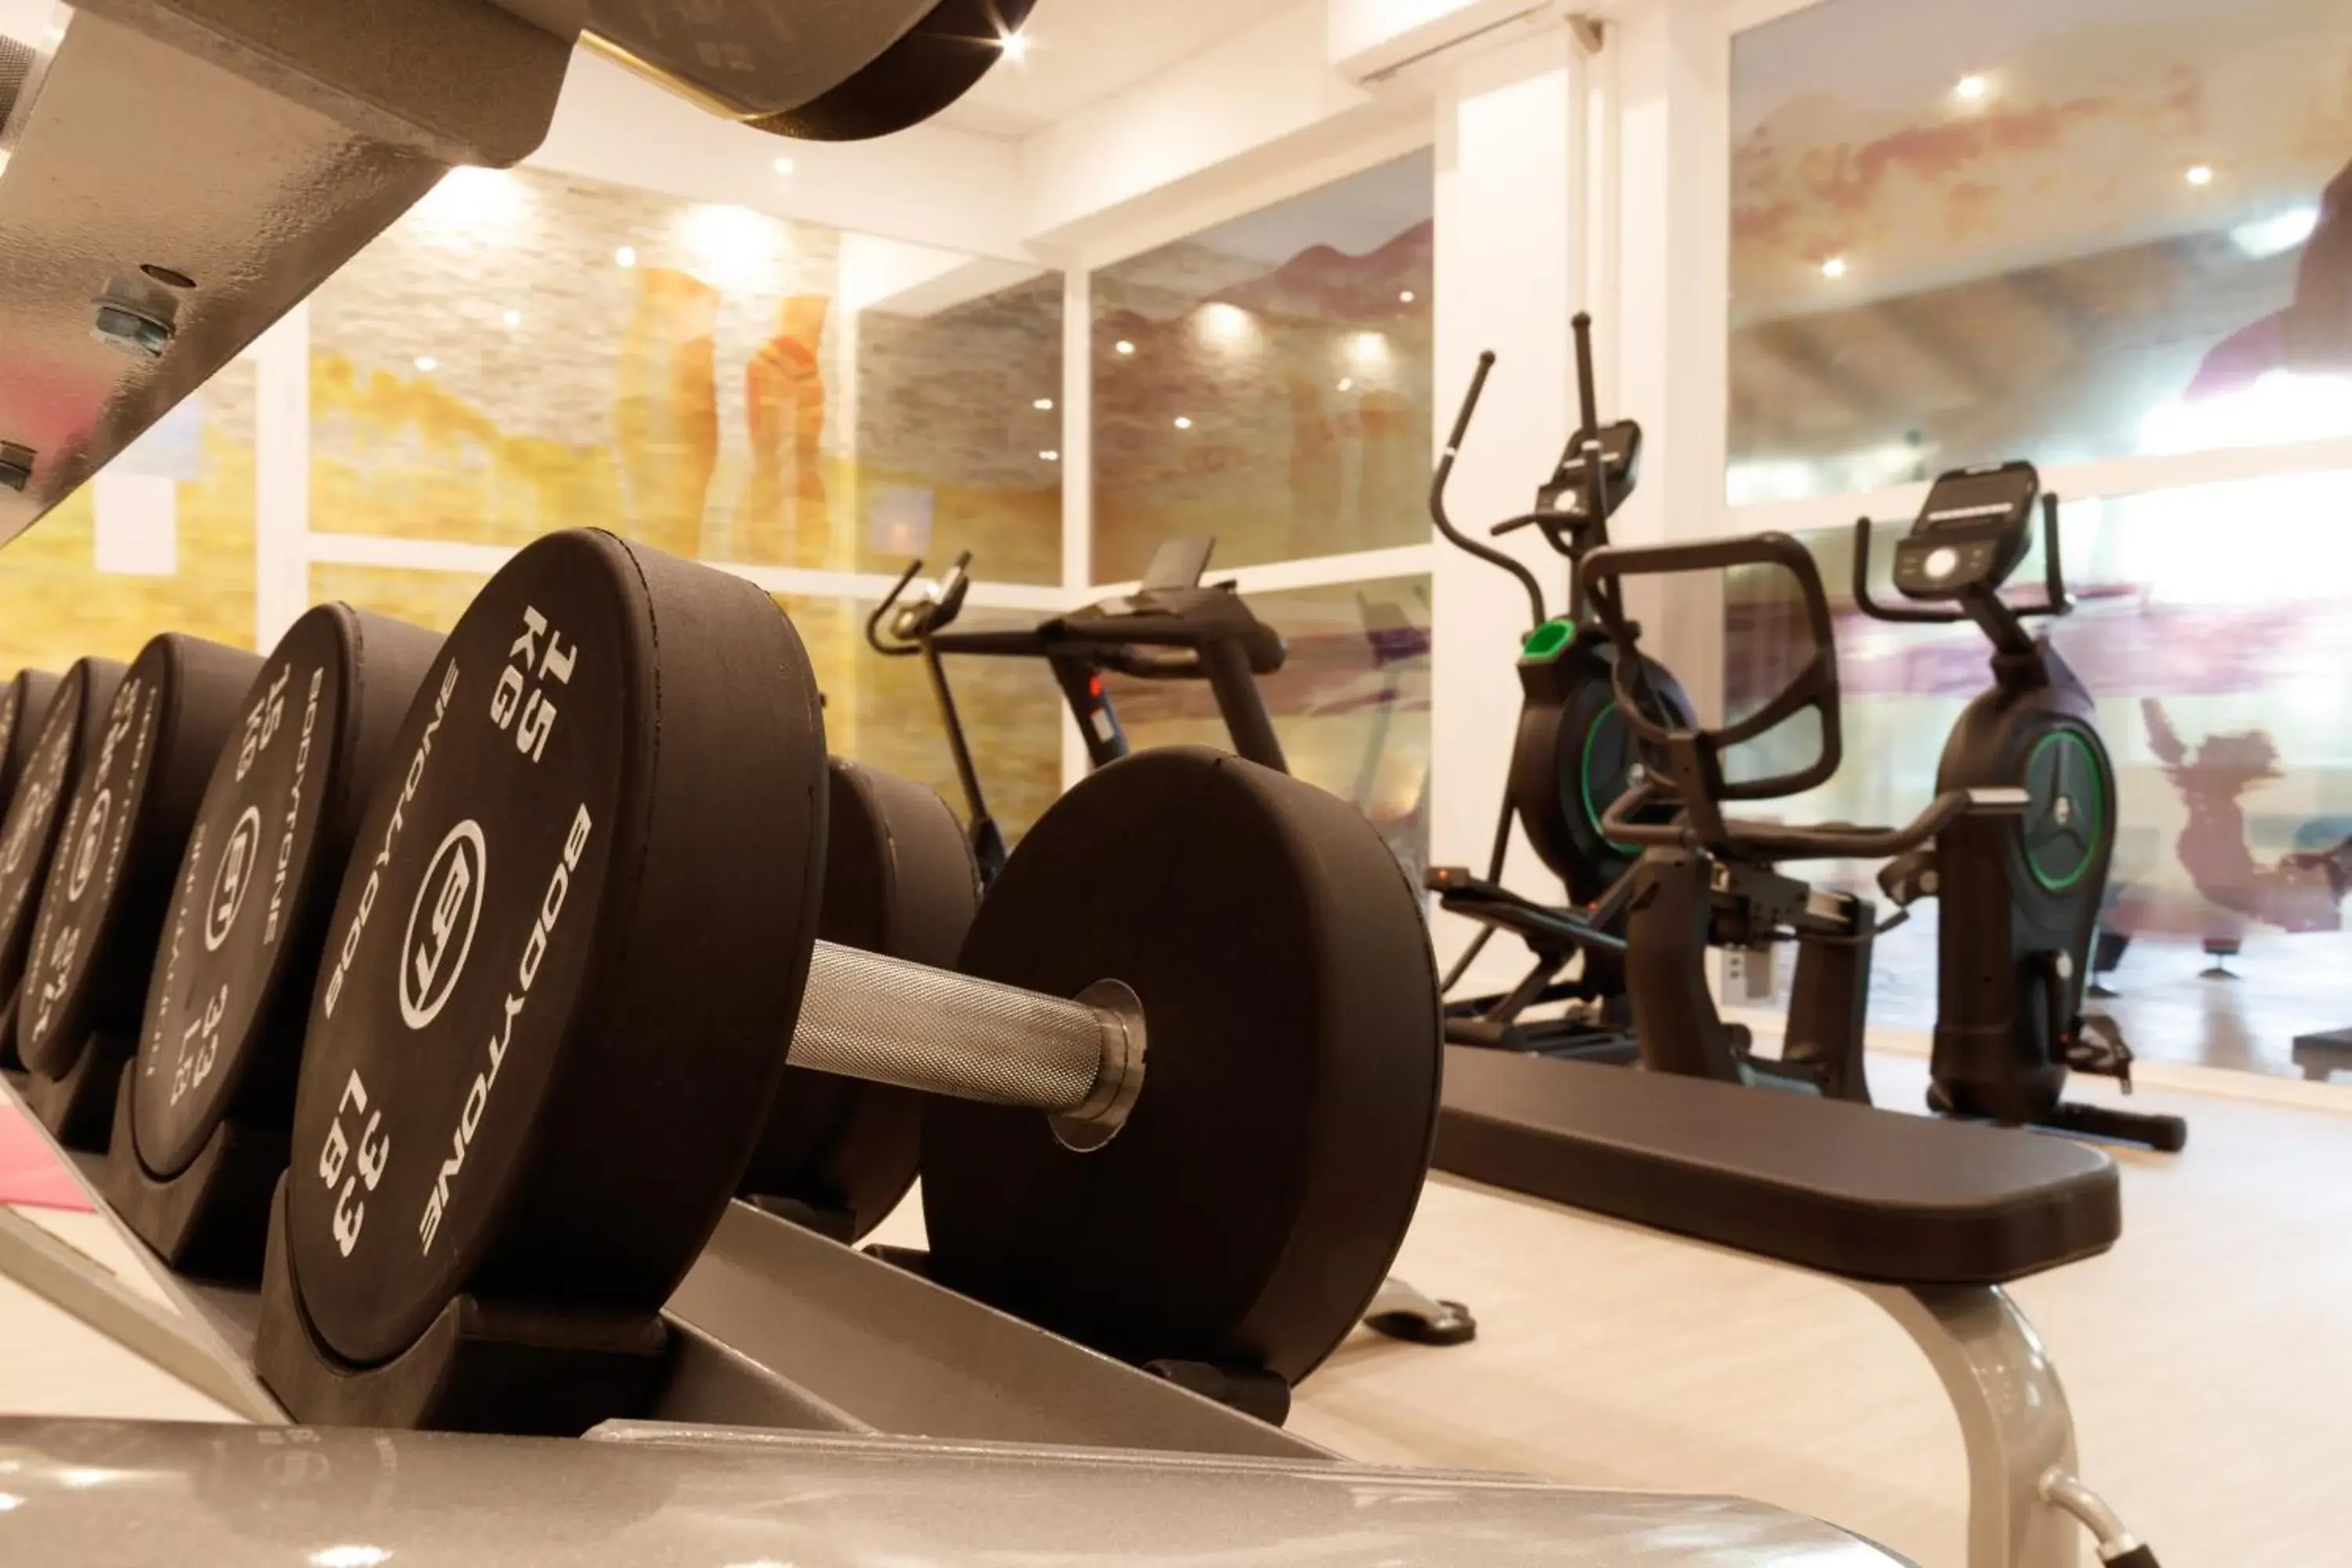 Fitness centre/facilities, Fitness Center/Facilities in Hotel Baviera